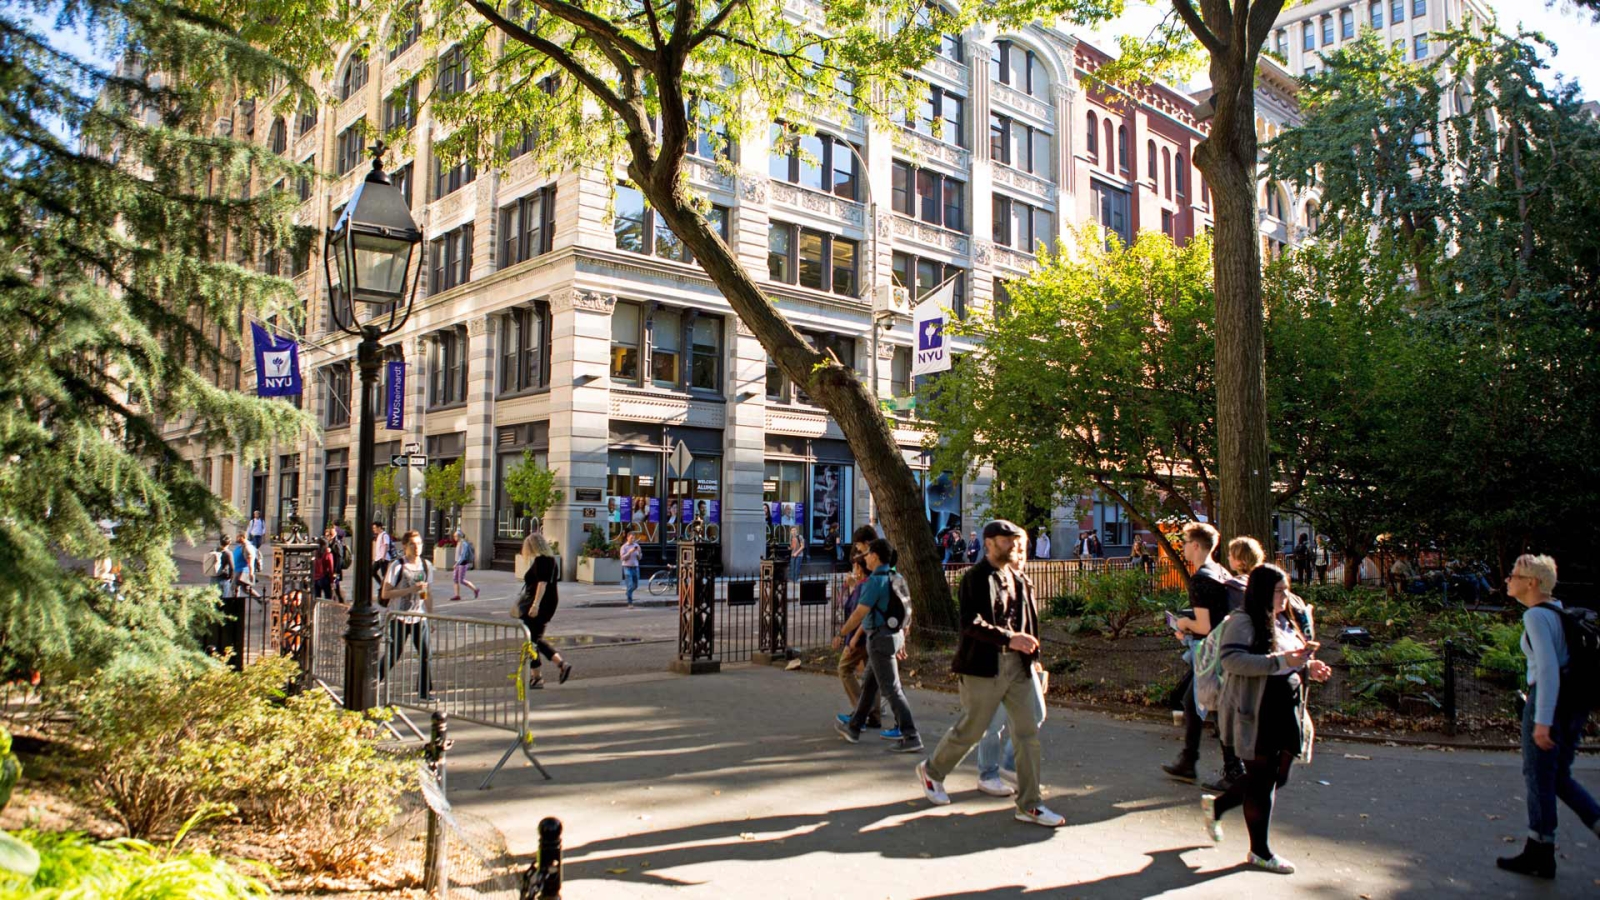 NYU Students walking through Washington Square Park